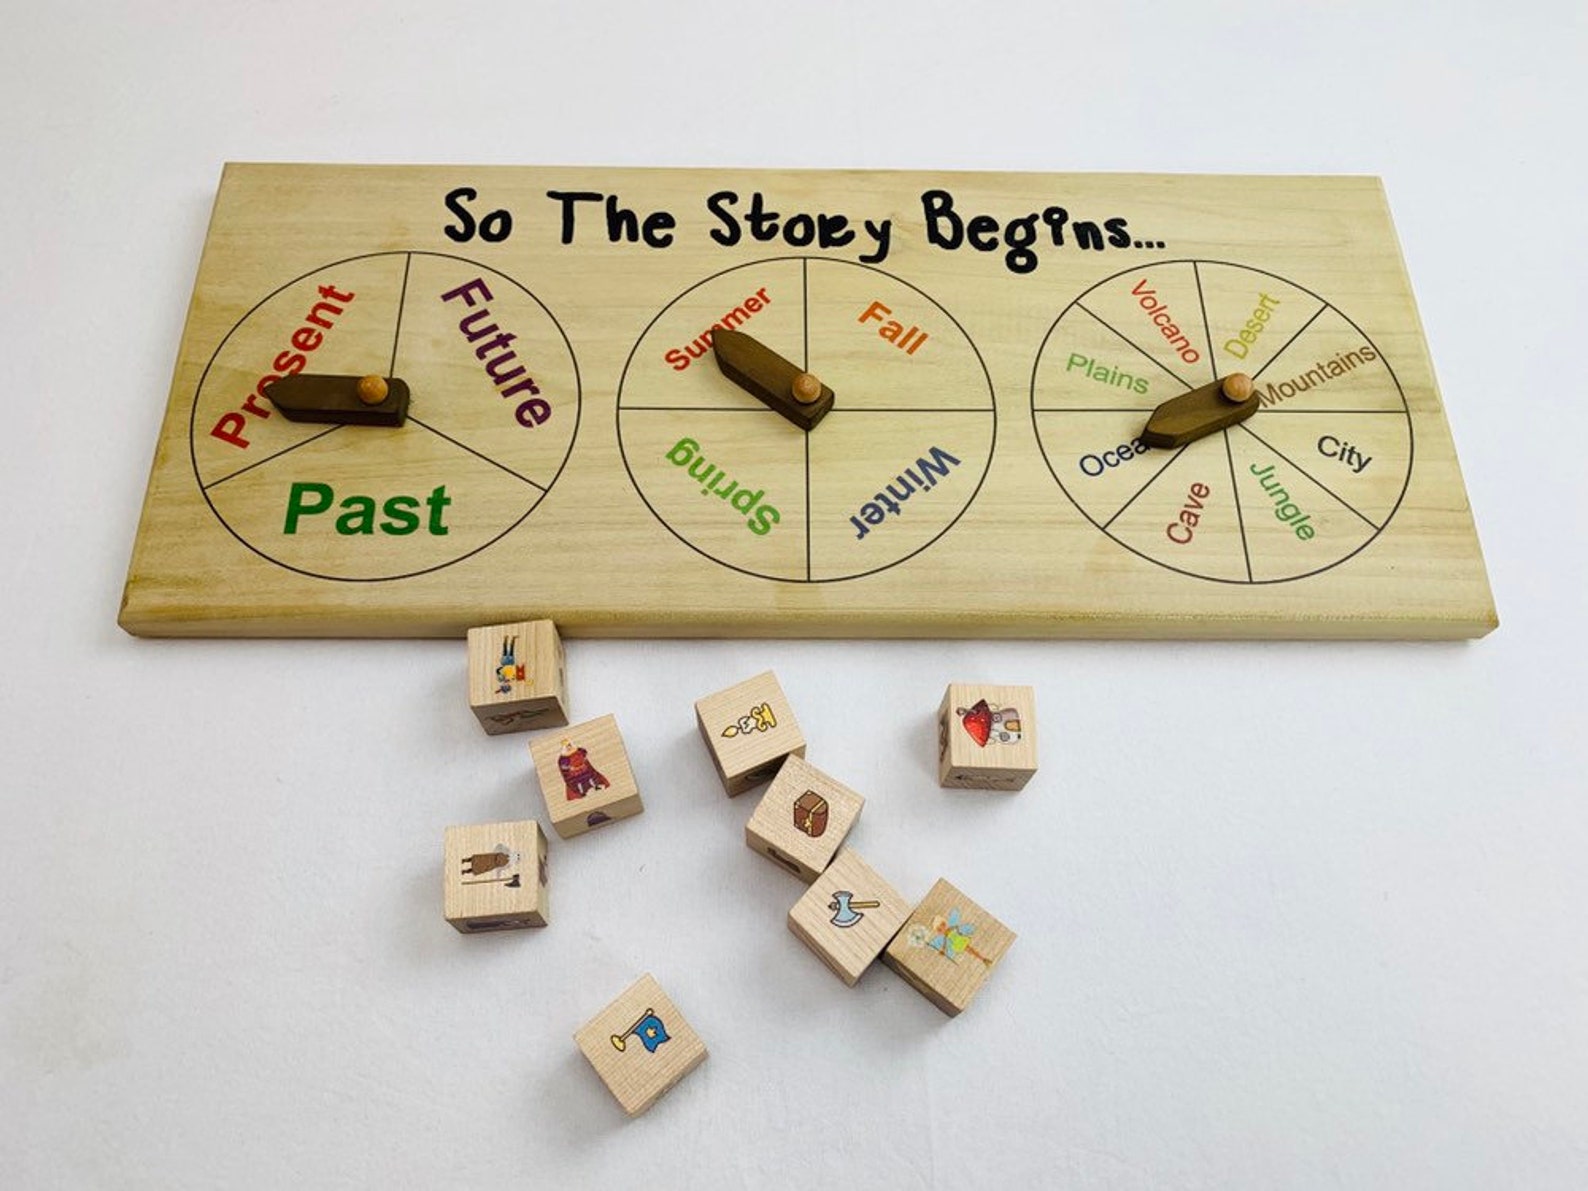 The story is set. Story Set. Story dice teachers.